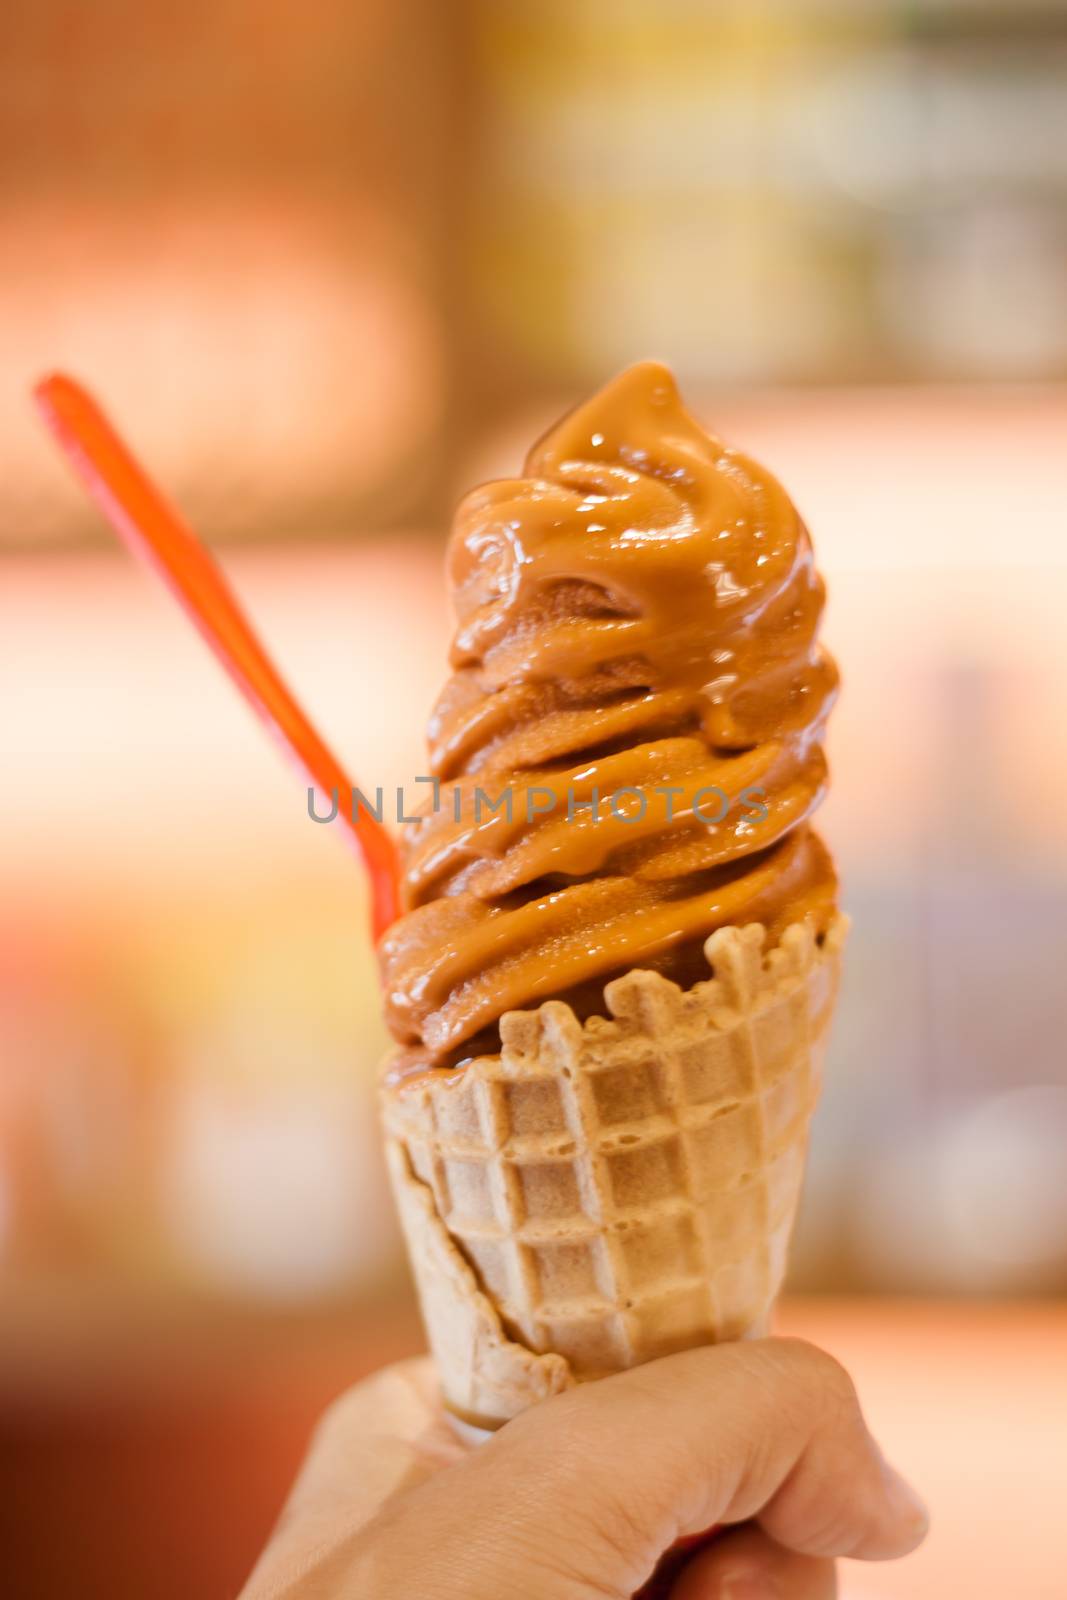 Ice cream cone on hand by punsayaporn